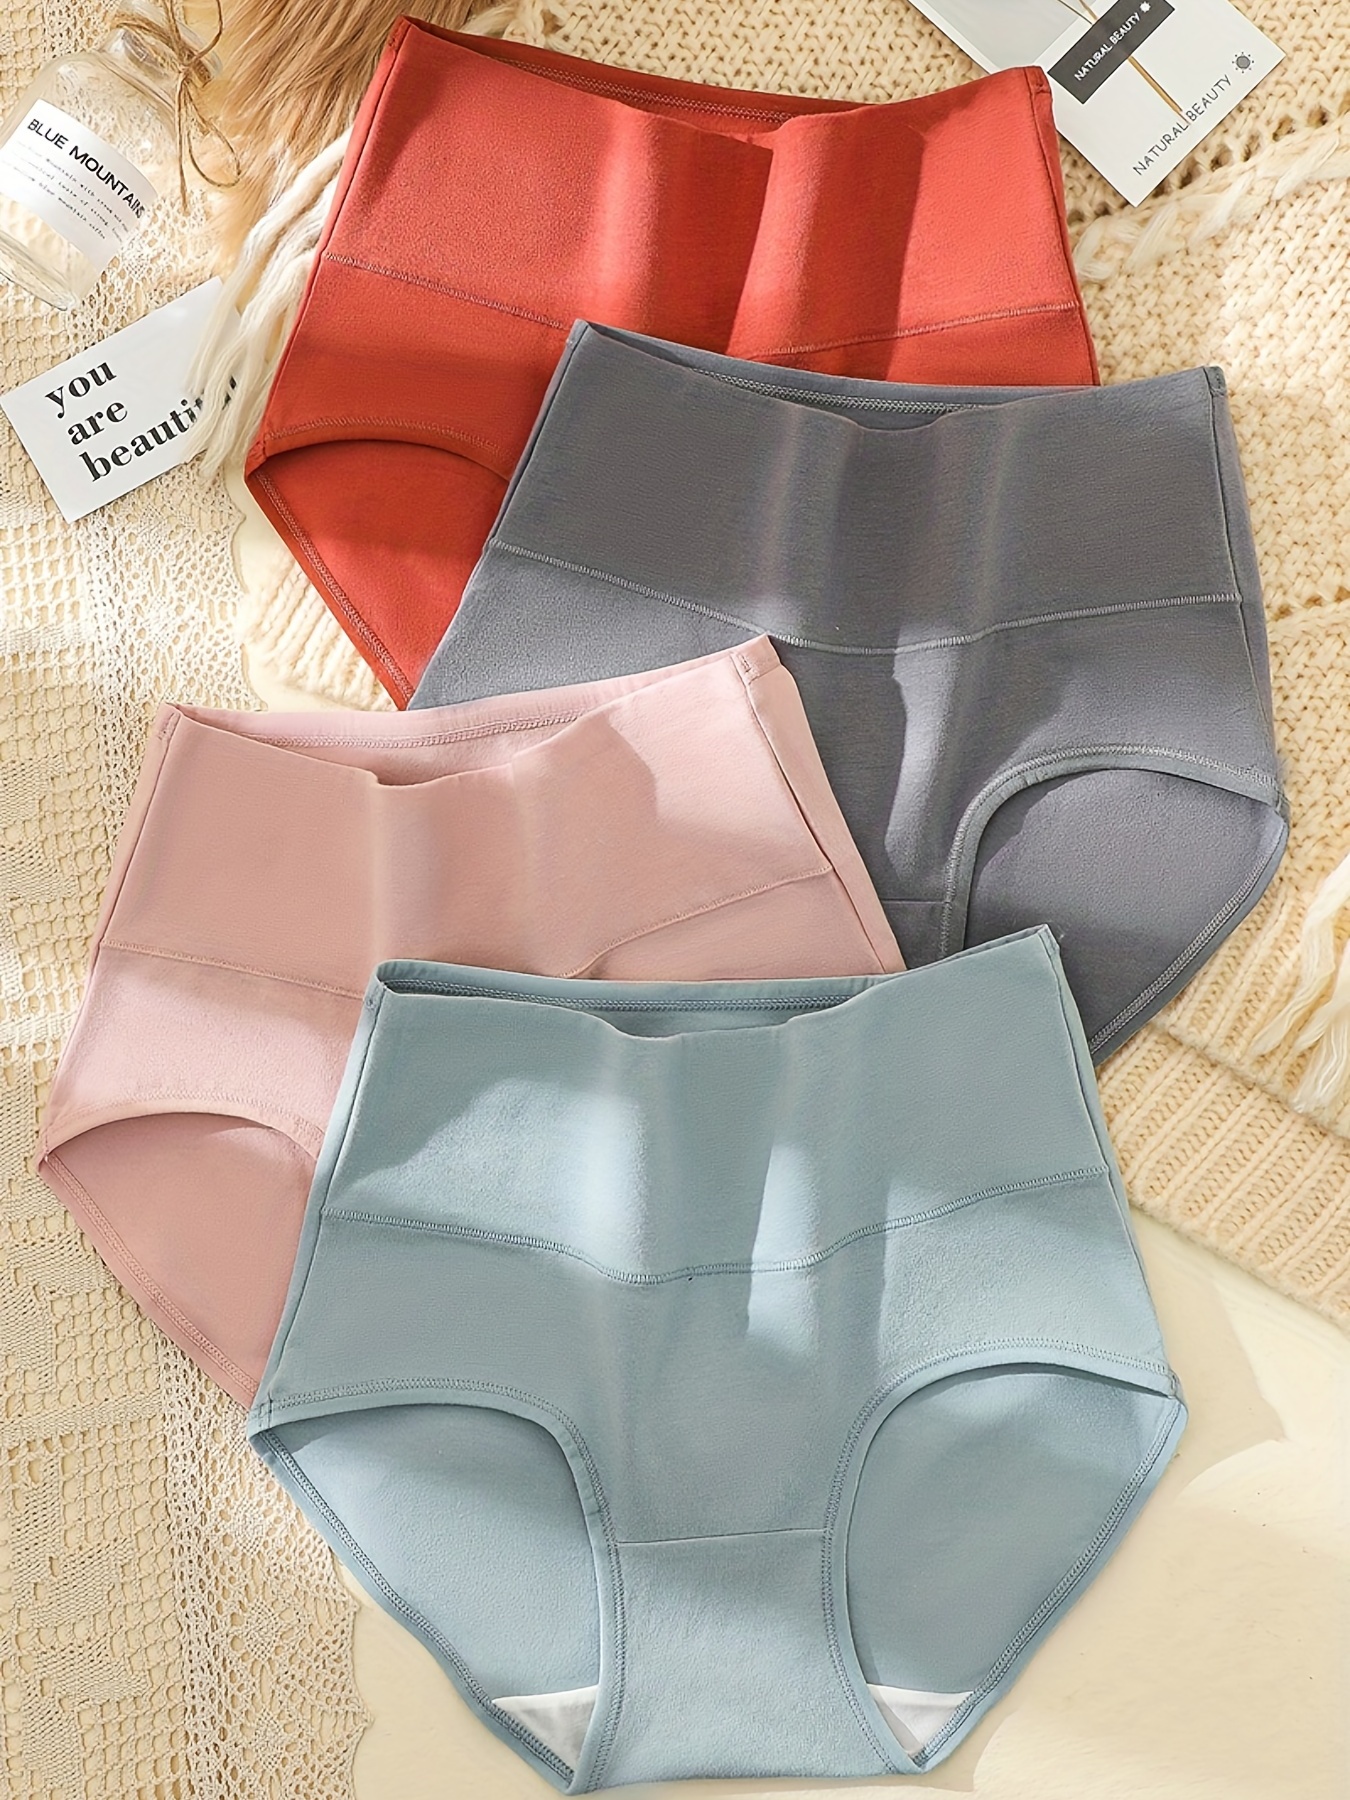 Cotton Intimates Lingerie Underwear